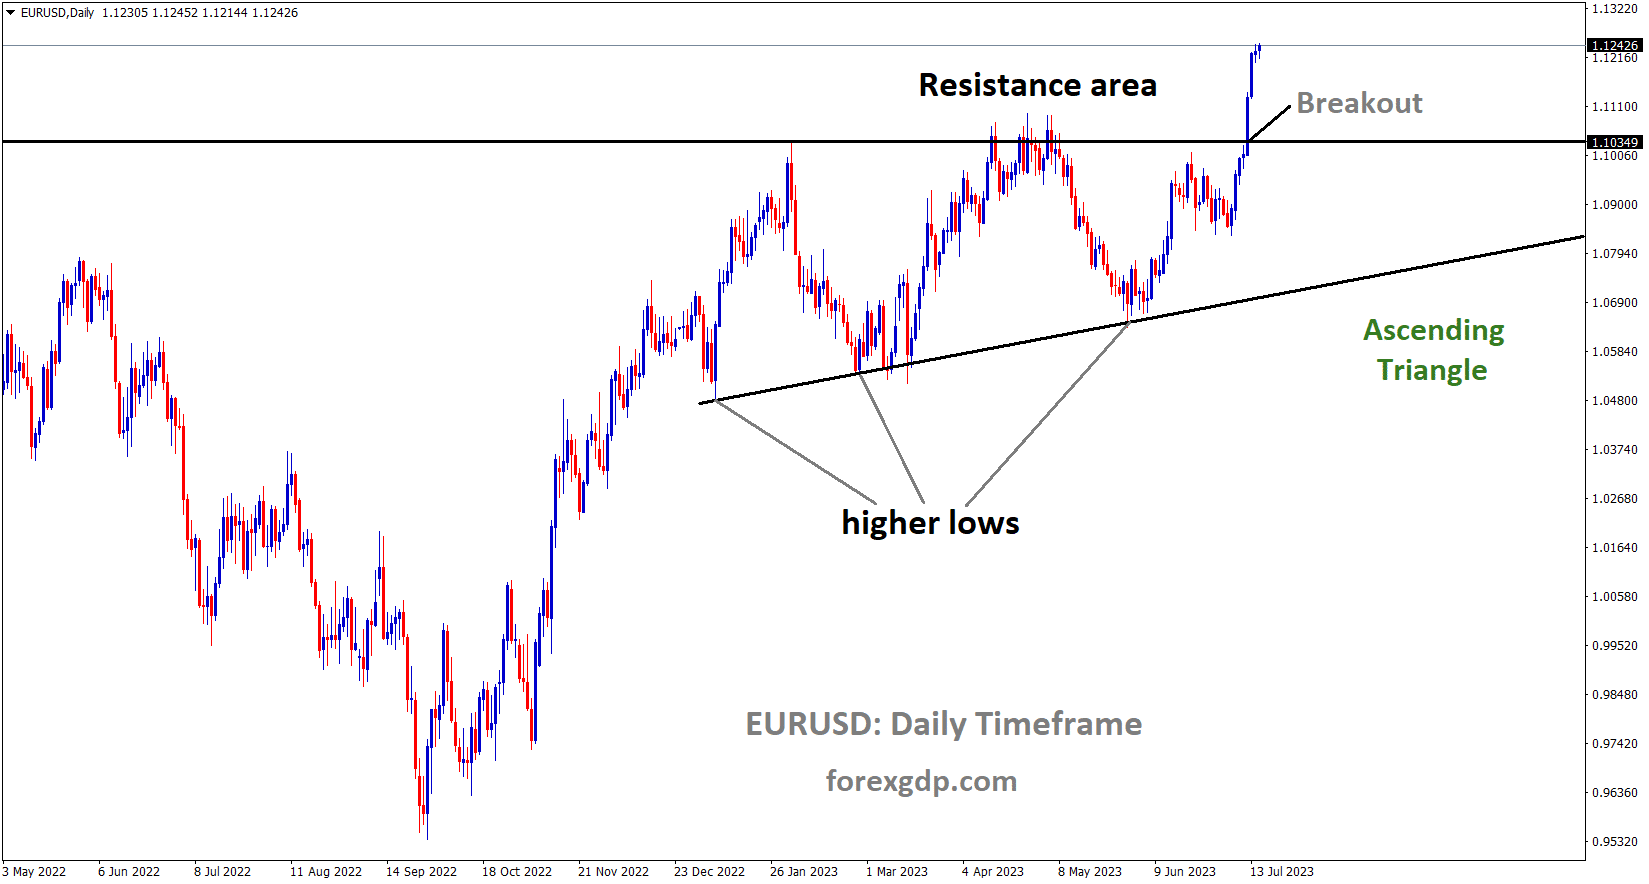 EURUSD has broken the Ascending channel in upside